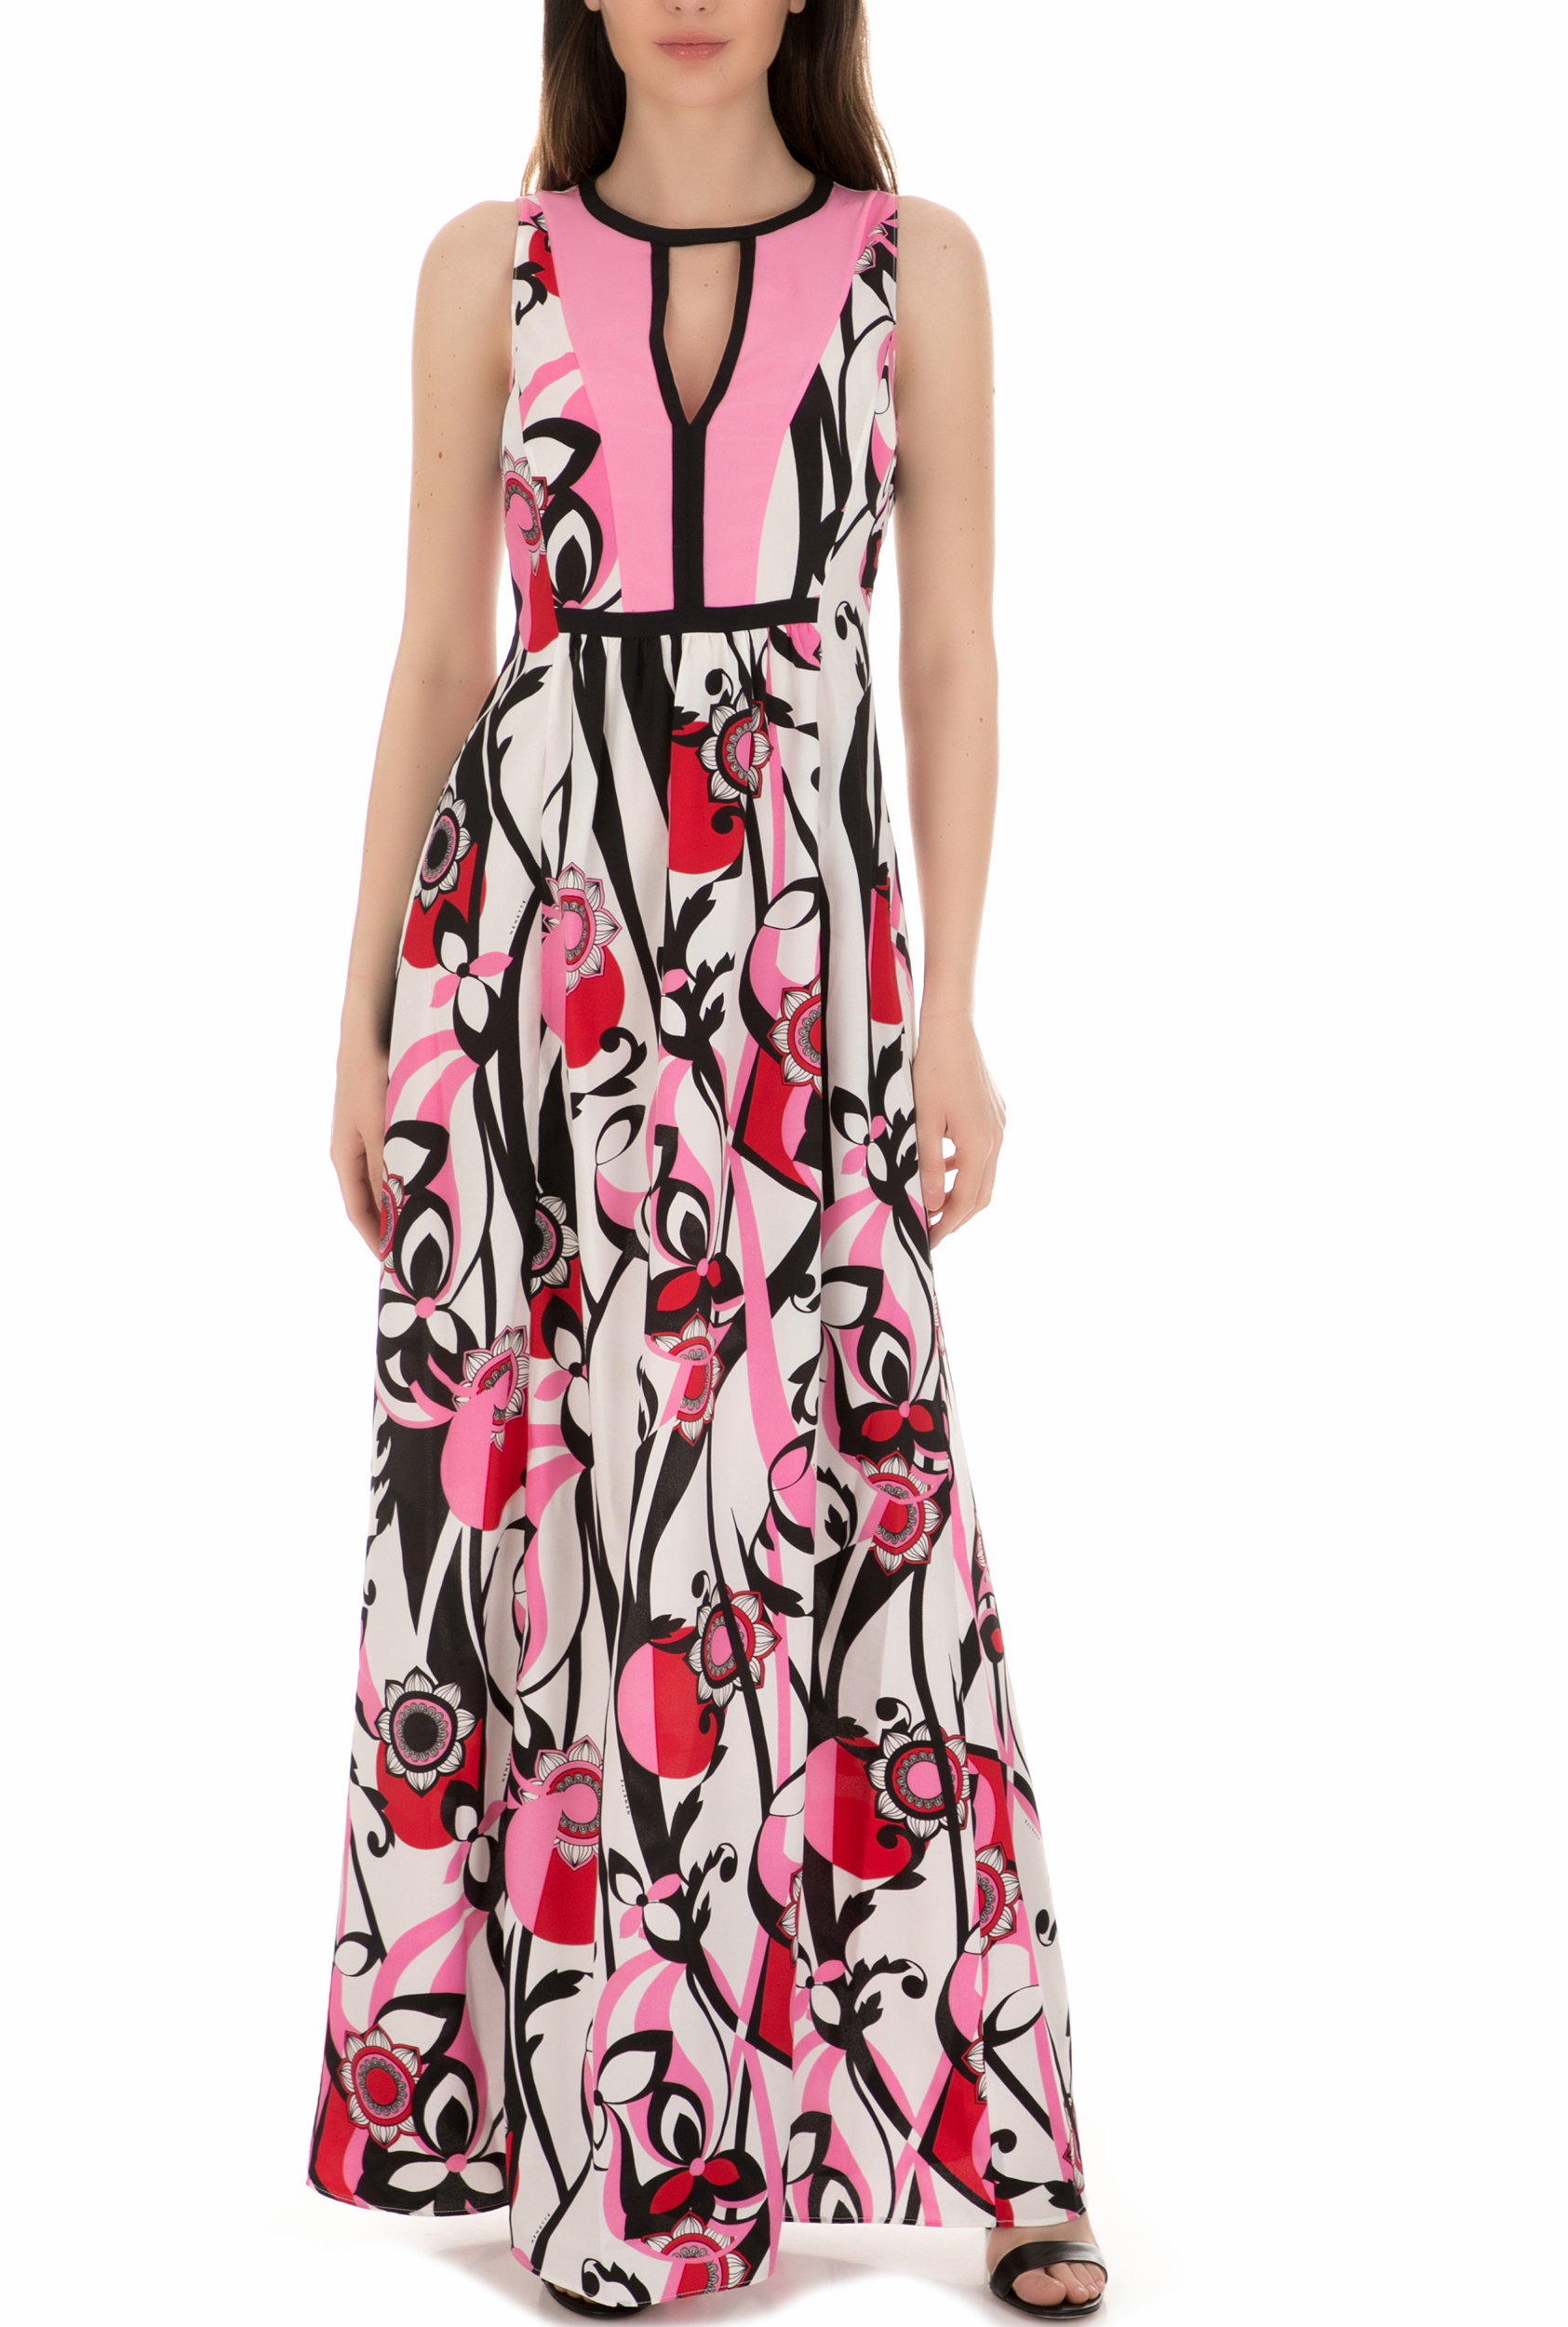 NENETTE – Γυναικείο φόρεμα ALEARDO ABITO LUNGO NENETTE λευκό-ροζ